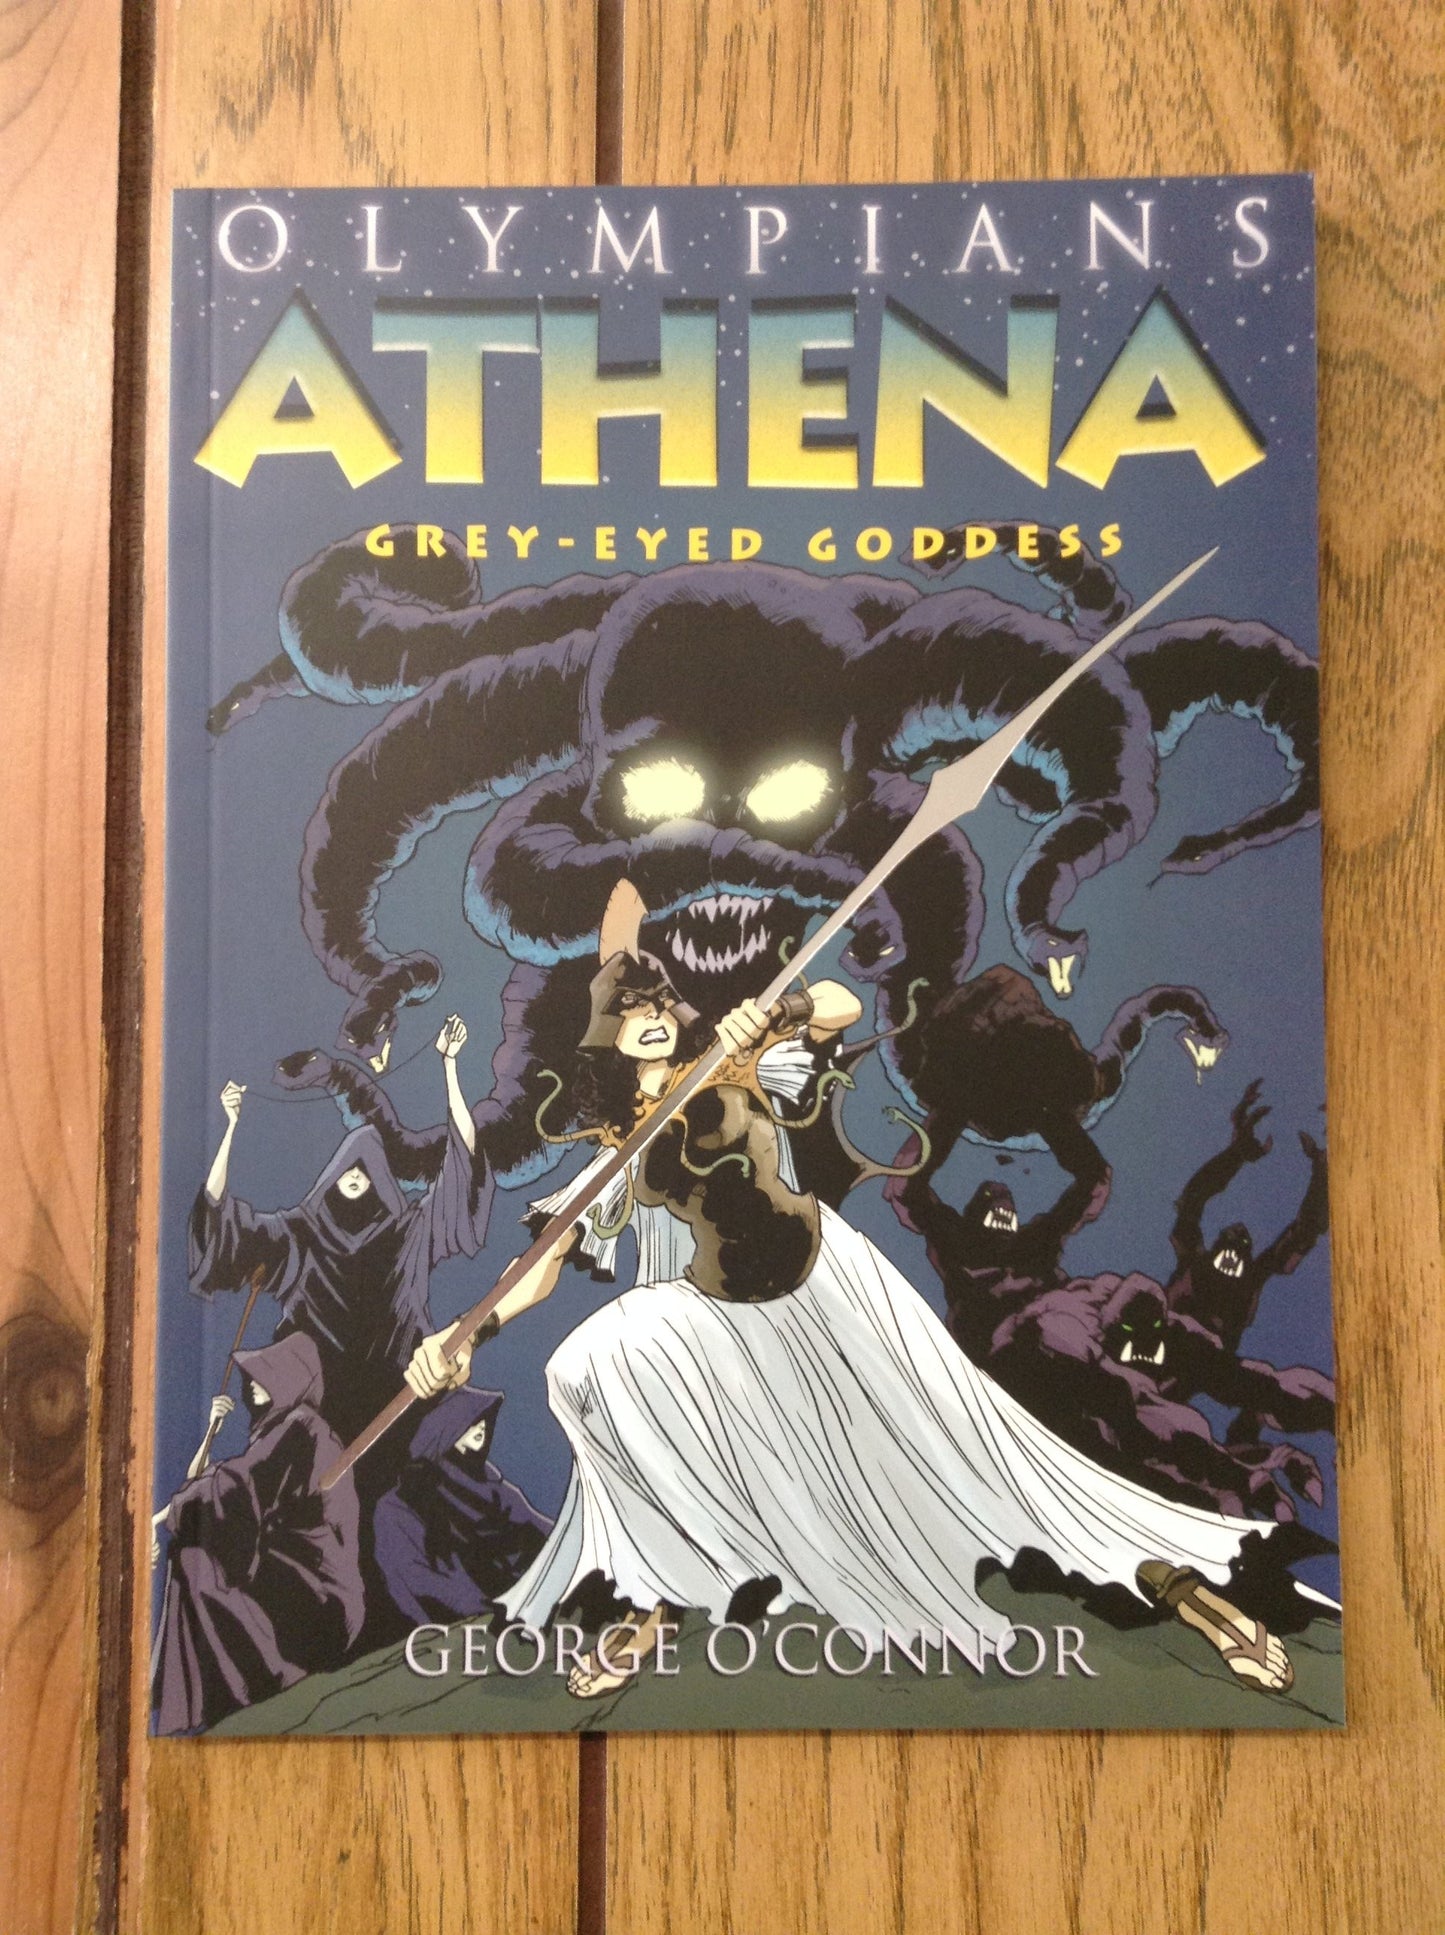 Athena: Grey-Eyed Goddess (Olympians Vol 2)